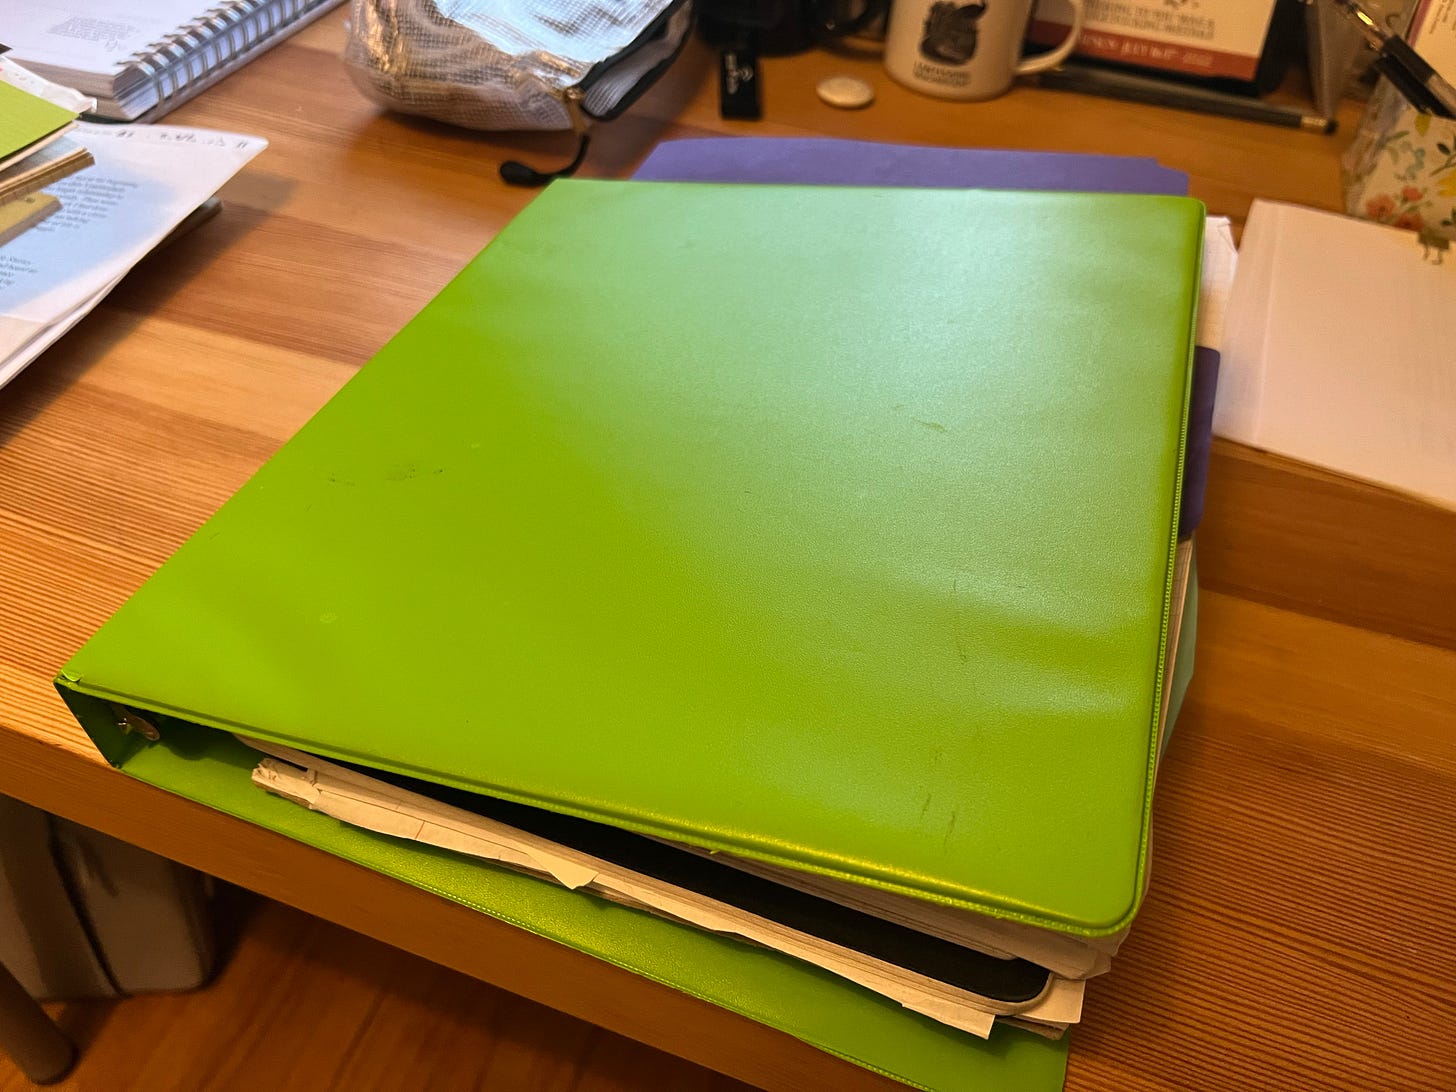 Green binder on a desk